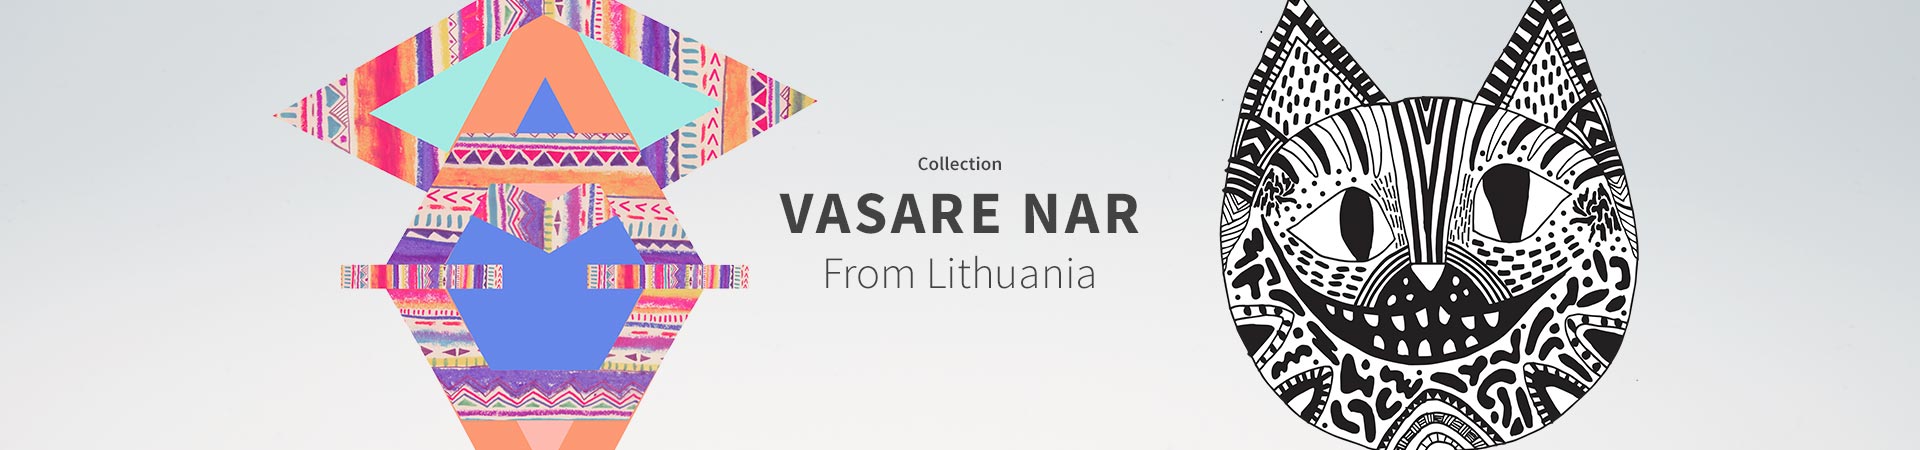 Collection Vasare Nar